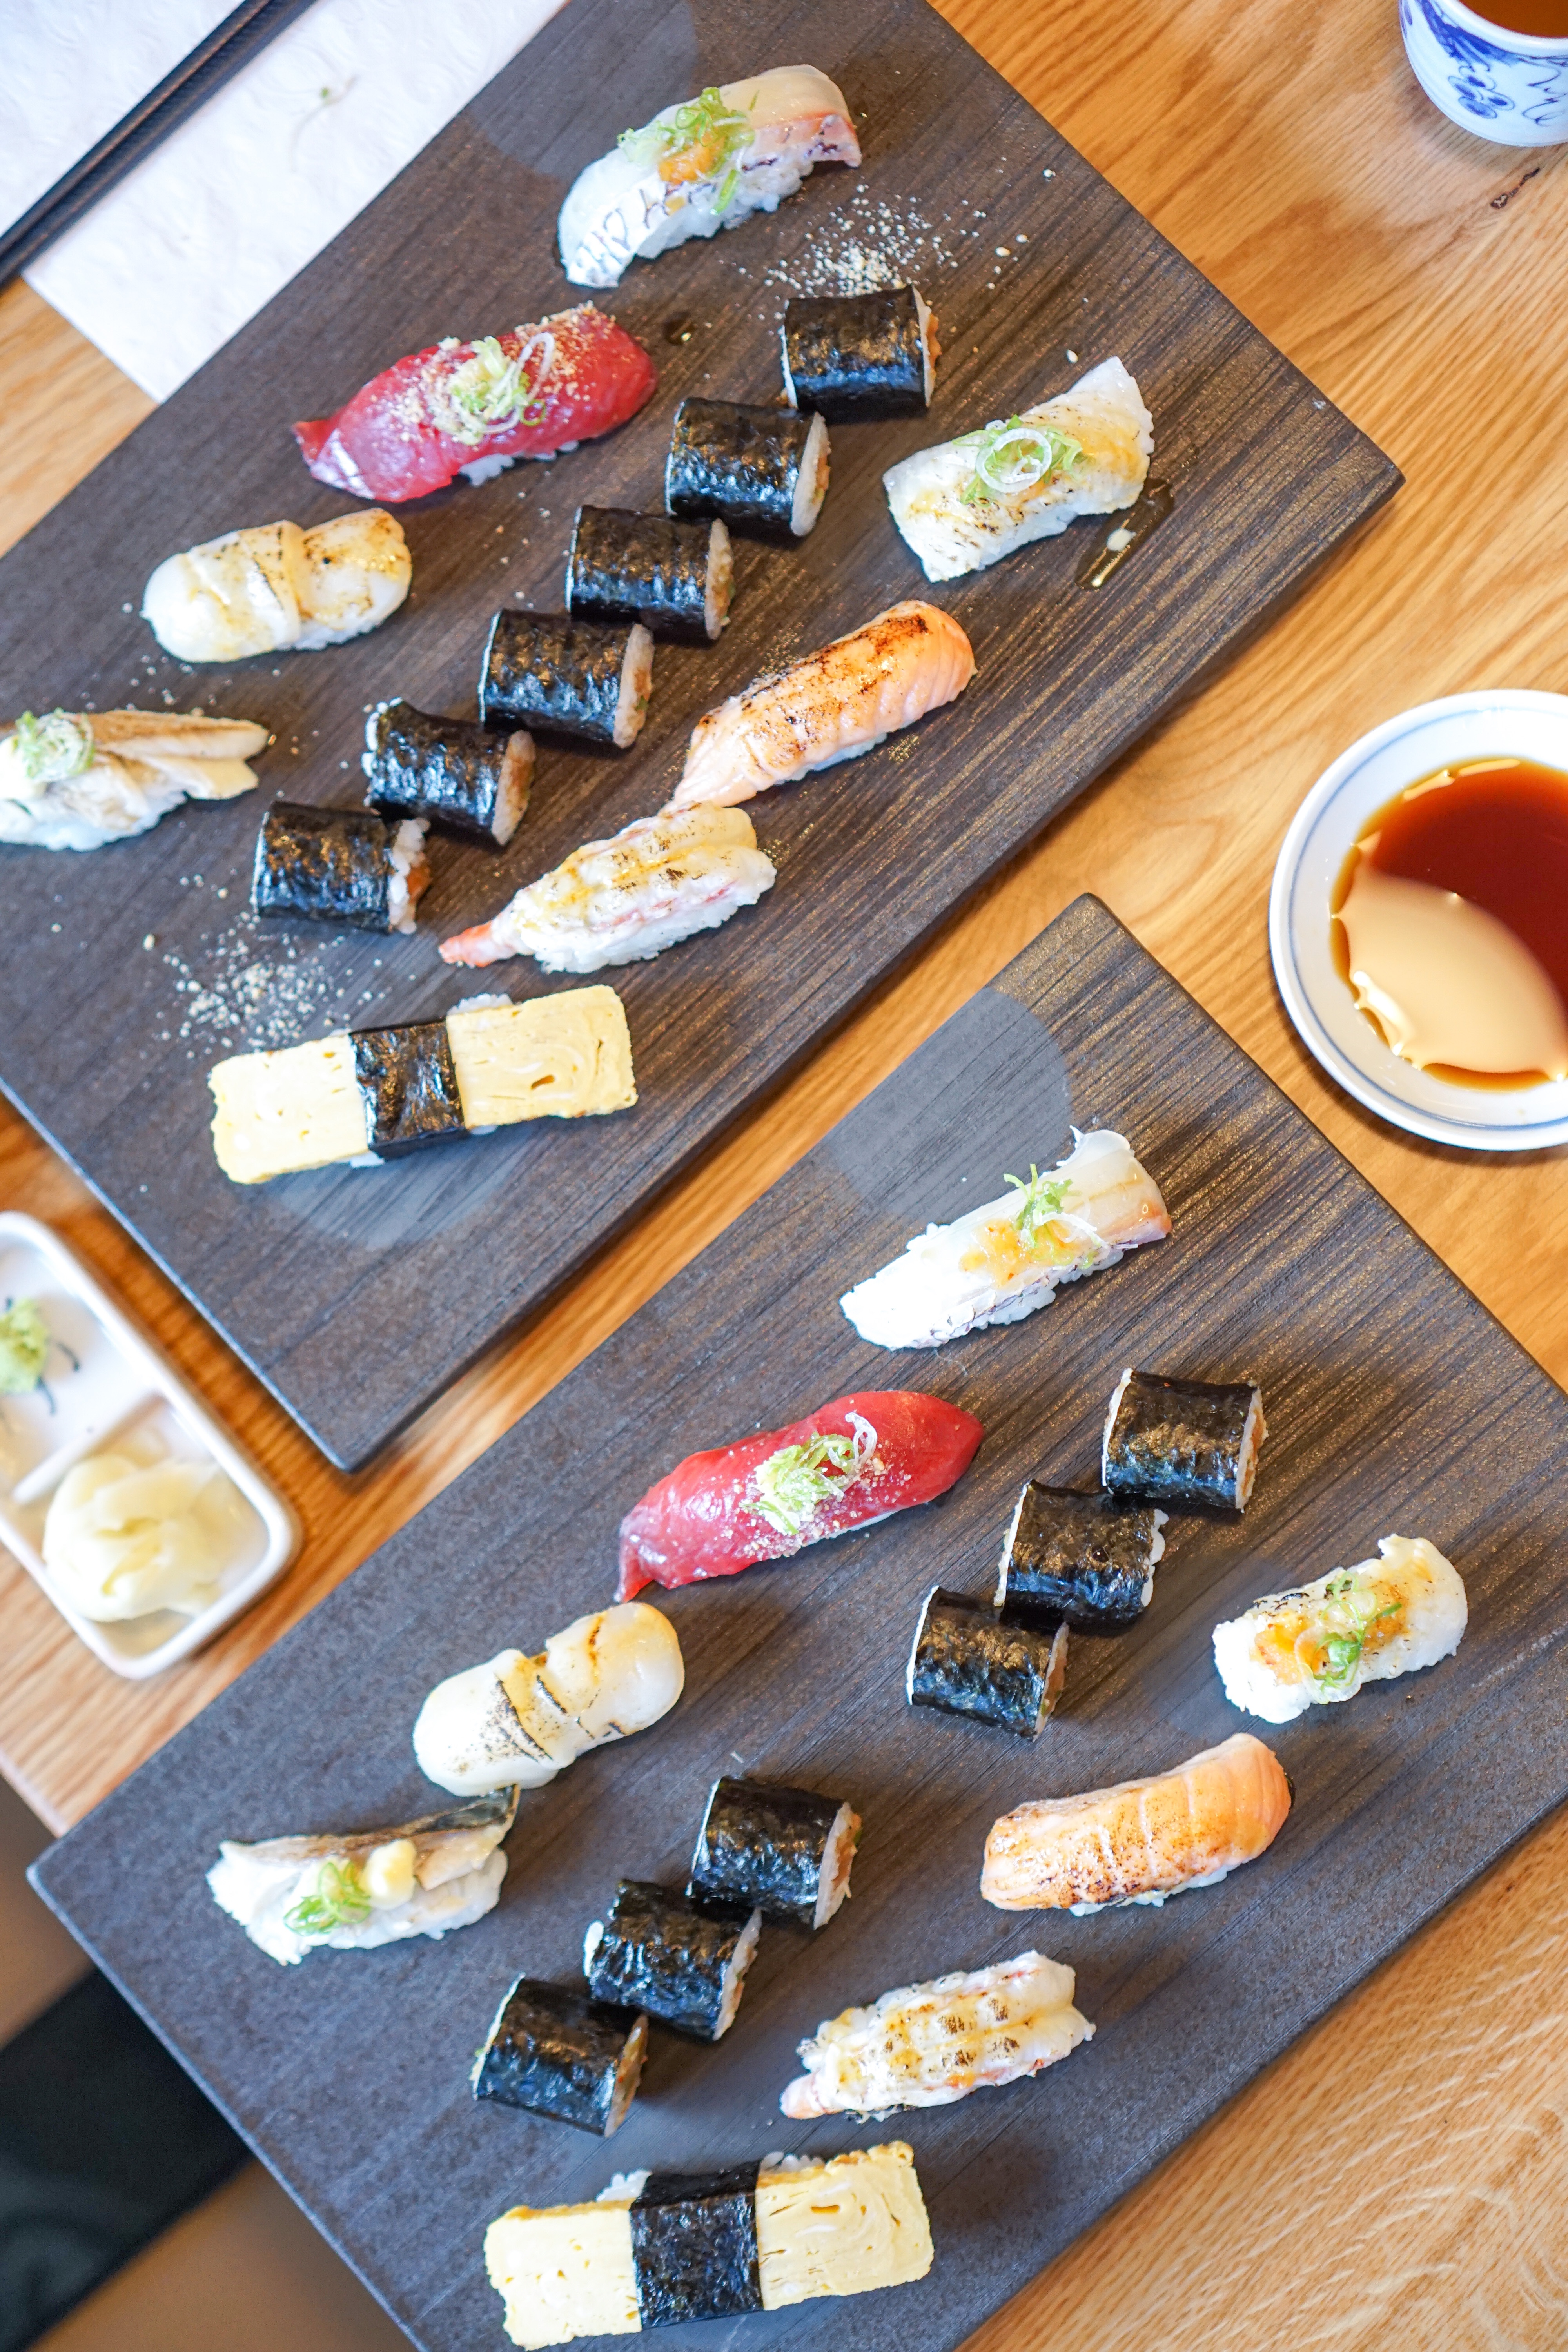 sushi hil vancouver mount pleasant sushi restaurant nigiri set